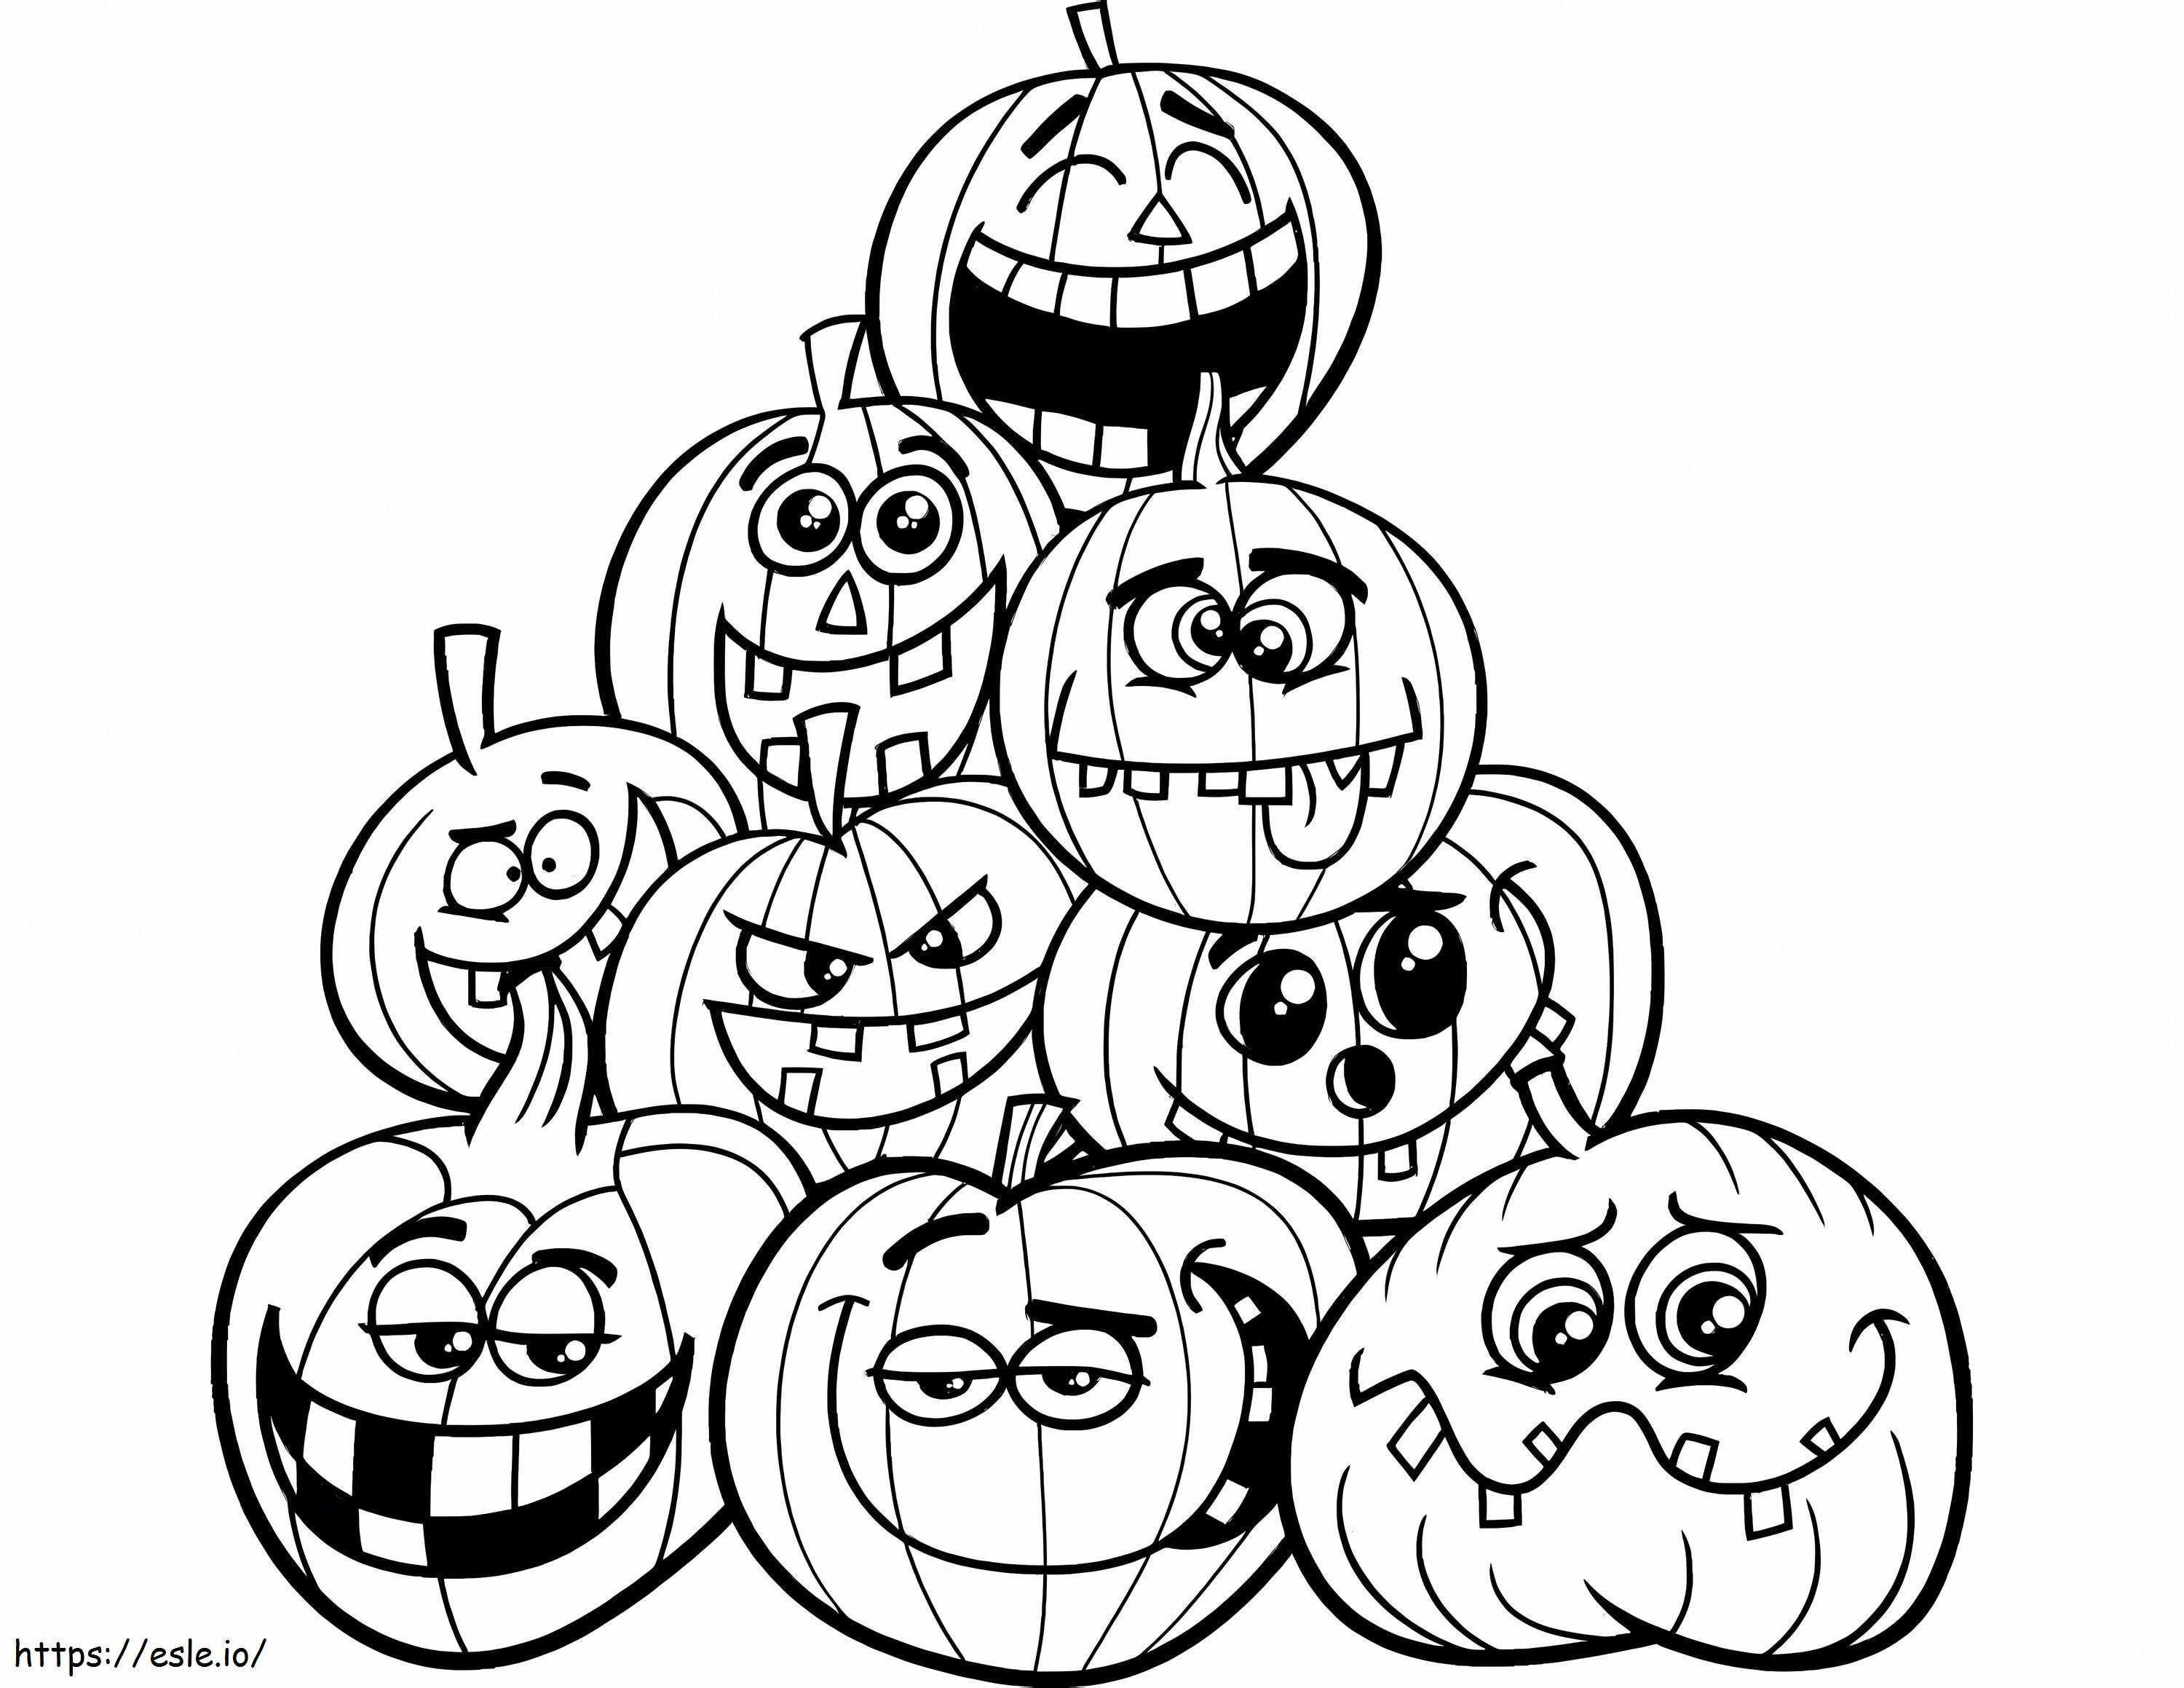 Cartoon Pumpkins coloring page